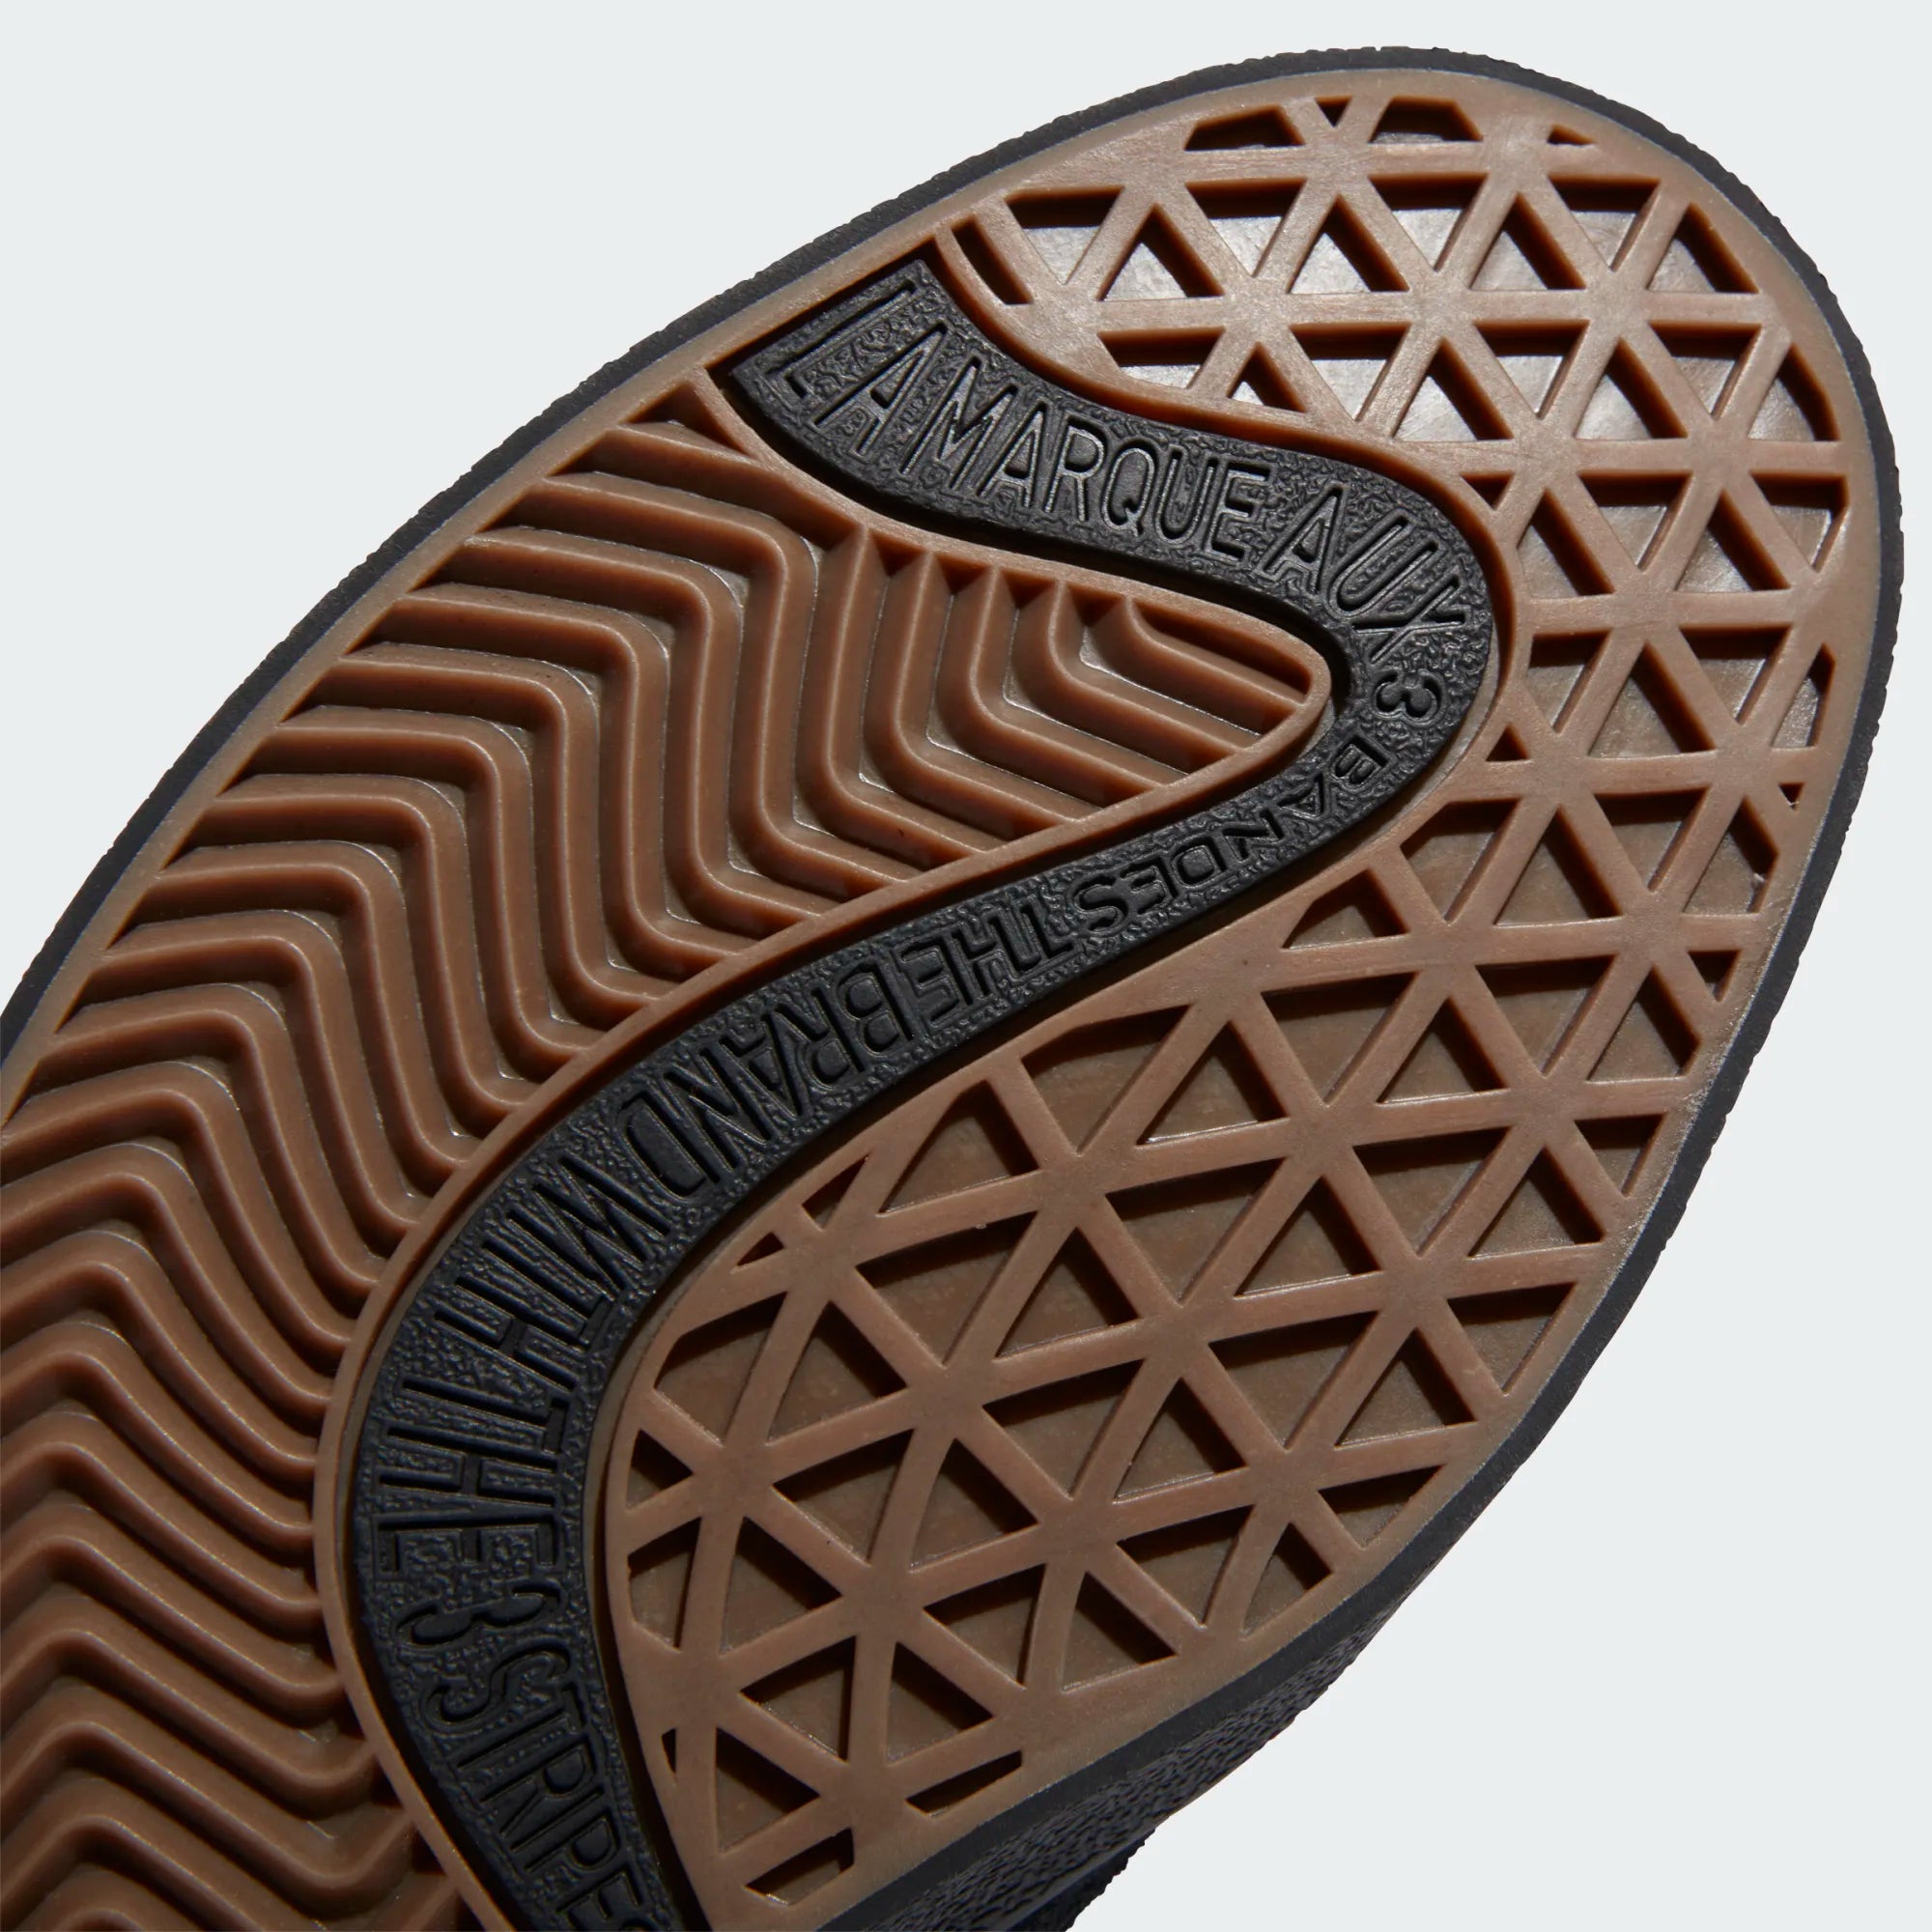 Black/White/Black Puig Indoor Adidas Skate Shoe Detail